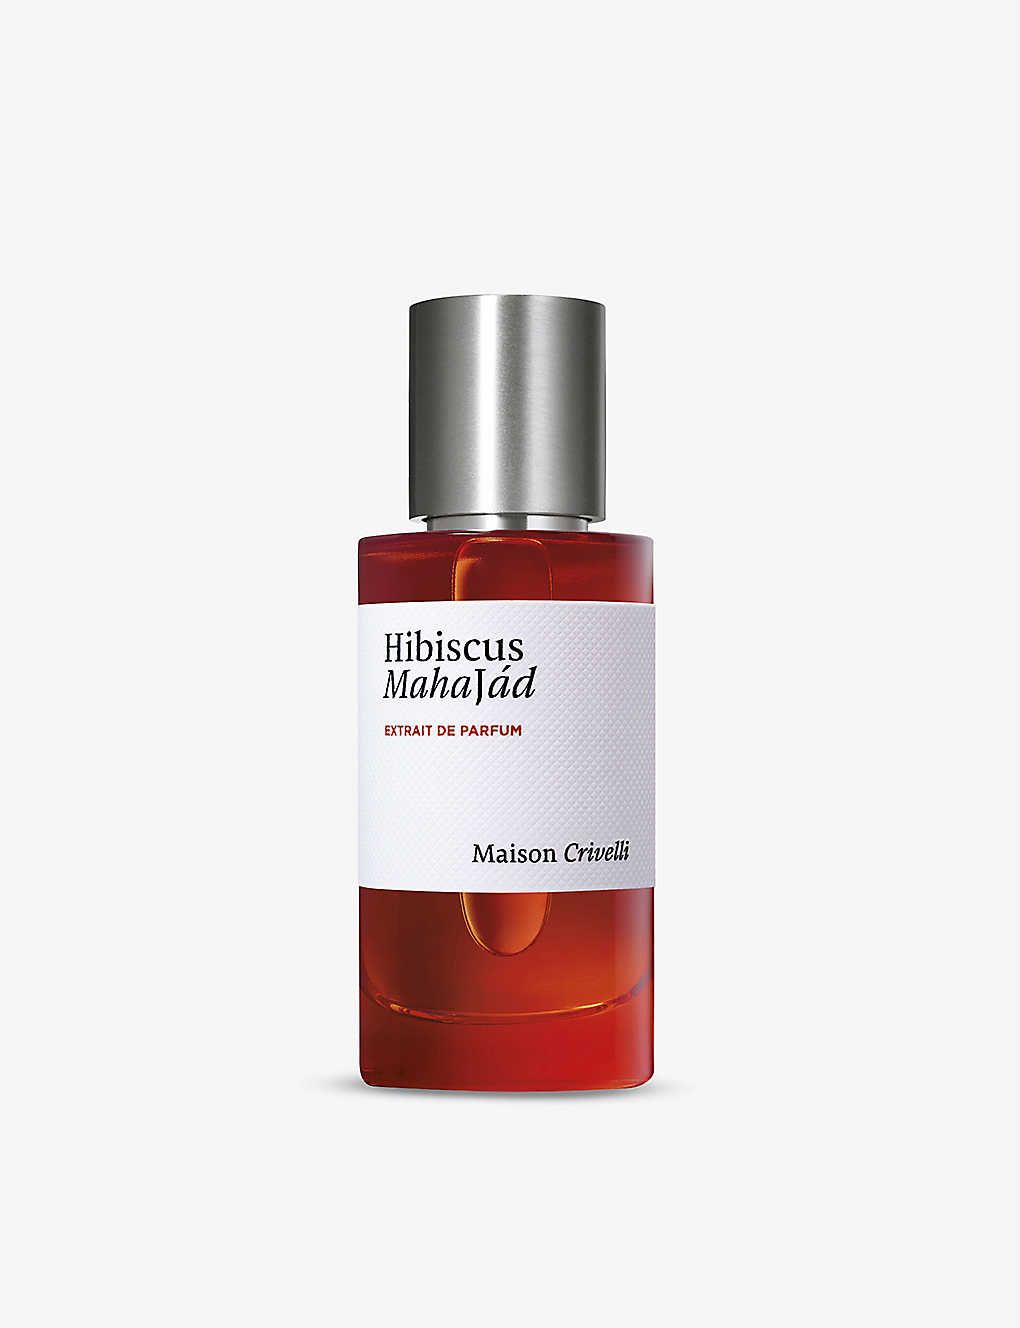 Hibiscus Mahajád extrait de parfum 50ml | Selfridges